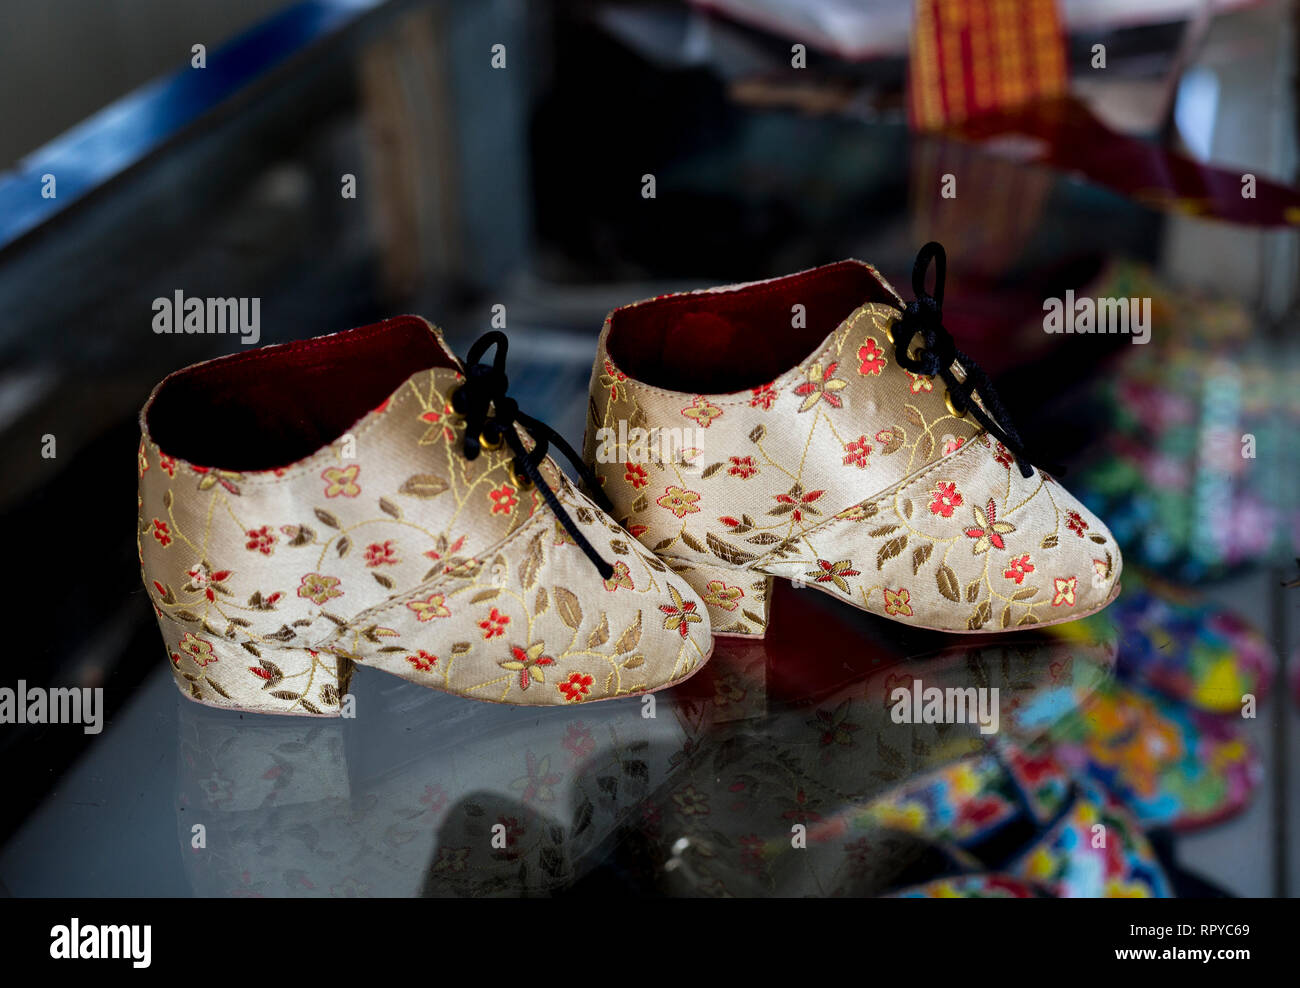 Scarpe in miniatura per i piedi legati, vecchio cinese tradizionale pratica, Melaka, Malaysia. Foto Stock